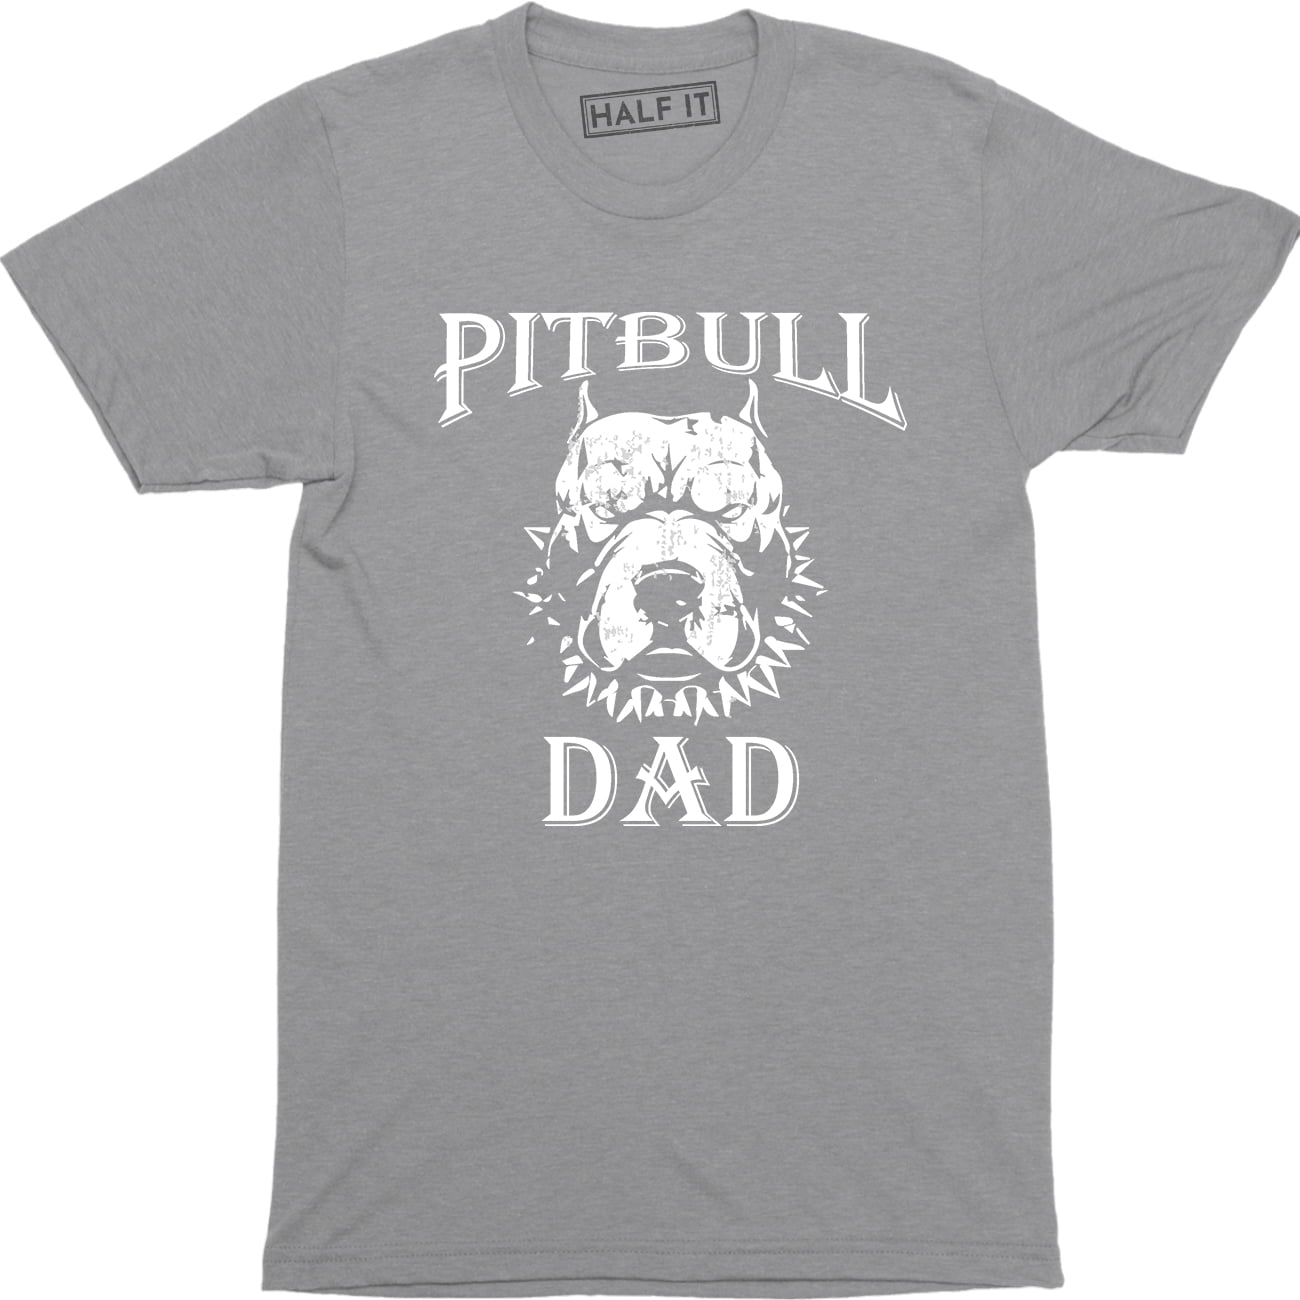 Pitbull Dad Shirt Was Born To Be PitBull Dad T-shirt On Back Full Size S -  5XL